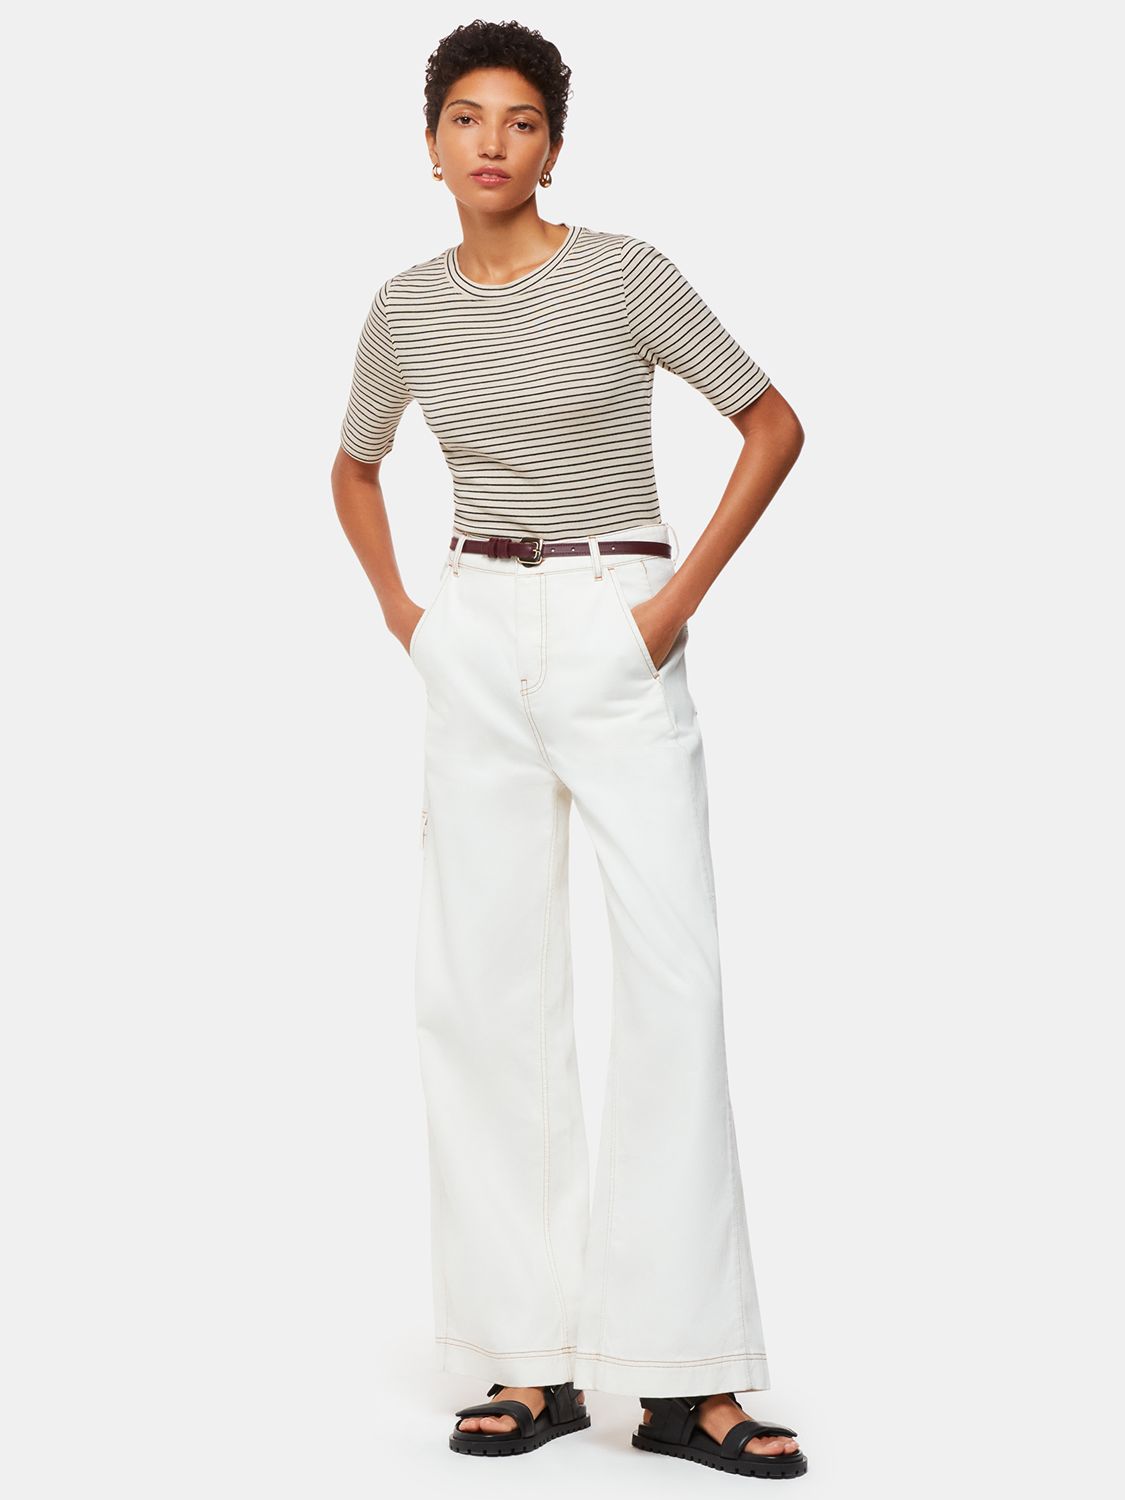 Buy Whistles Slim Fit Stripe T-Shirt, Navy/Off White Online at johnlewis.com